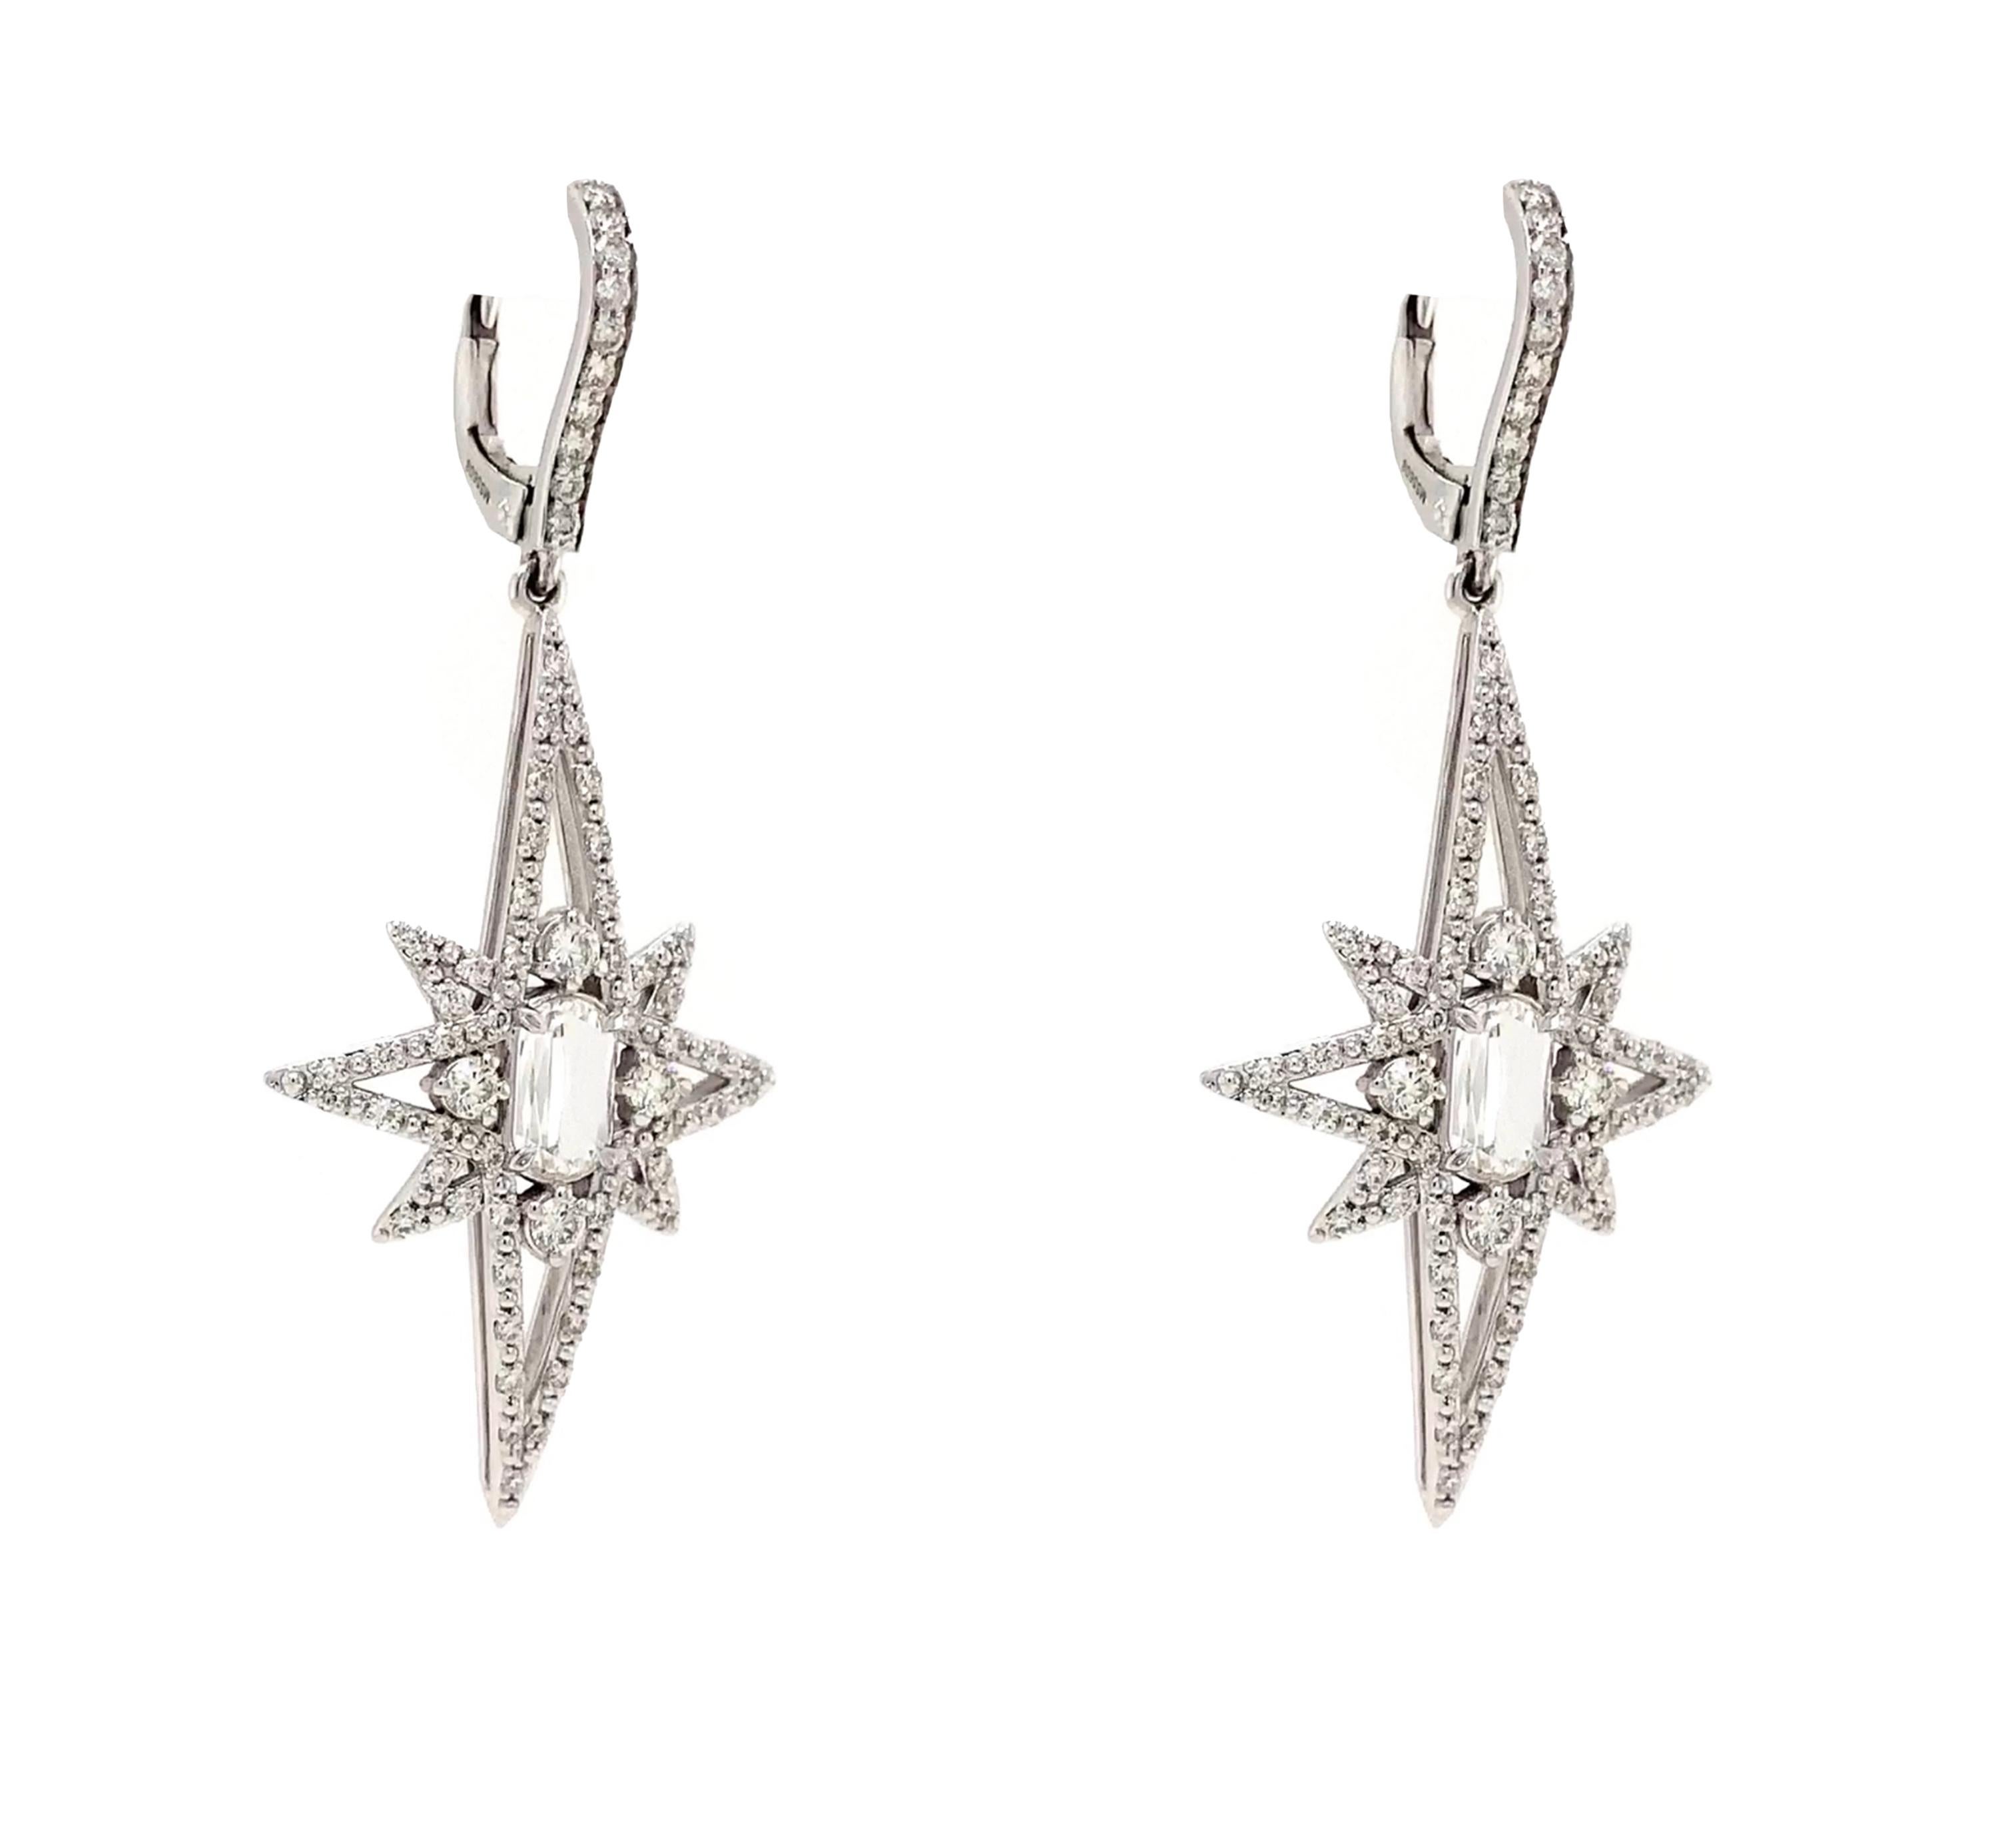 Art Deco Christopher Designs Crisscut L'Amour Drop Earrings Brilliantly Shining Stars For Sale